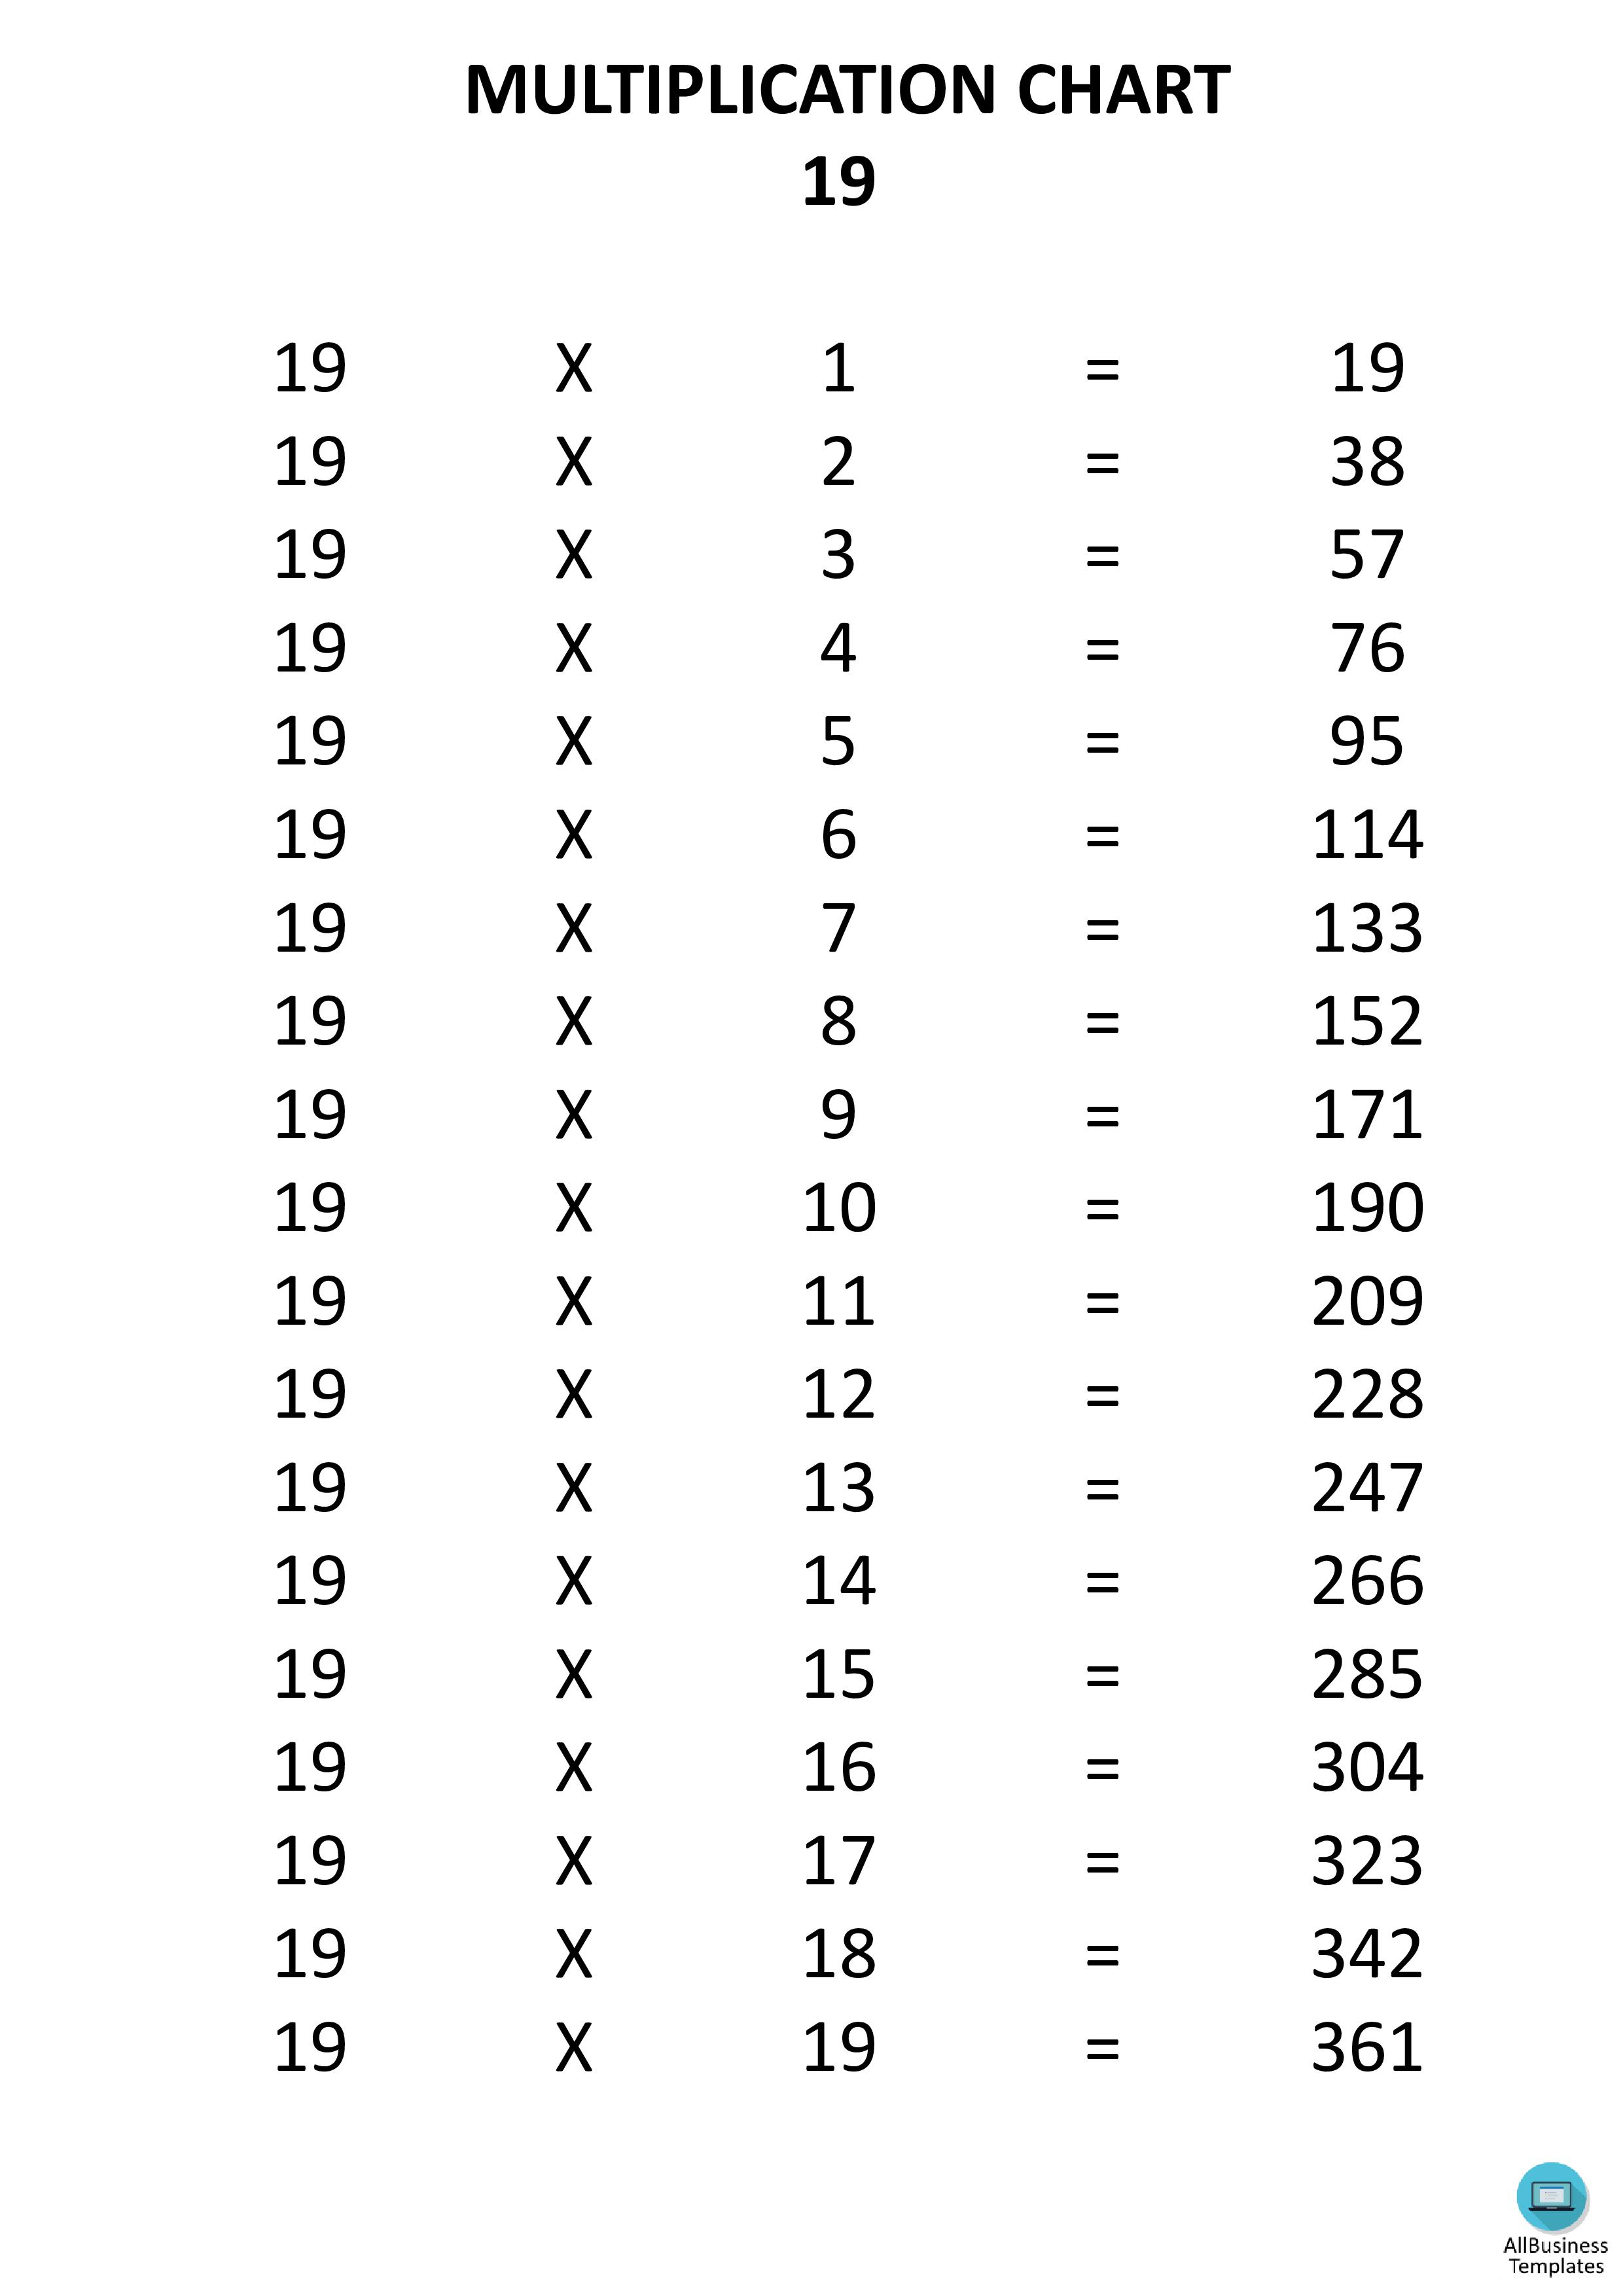 Multiplication Chart x19 main image